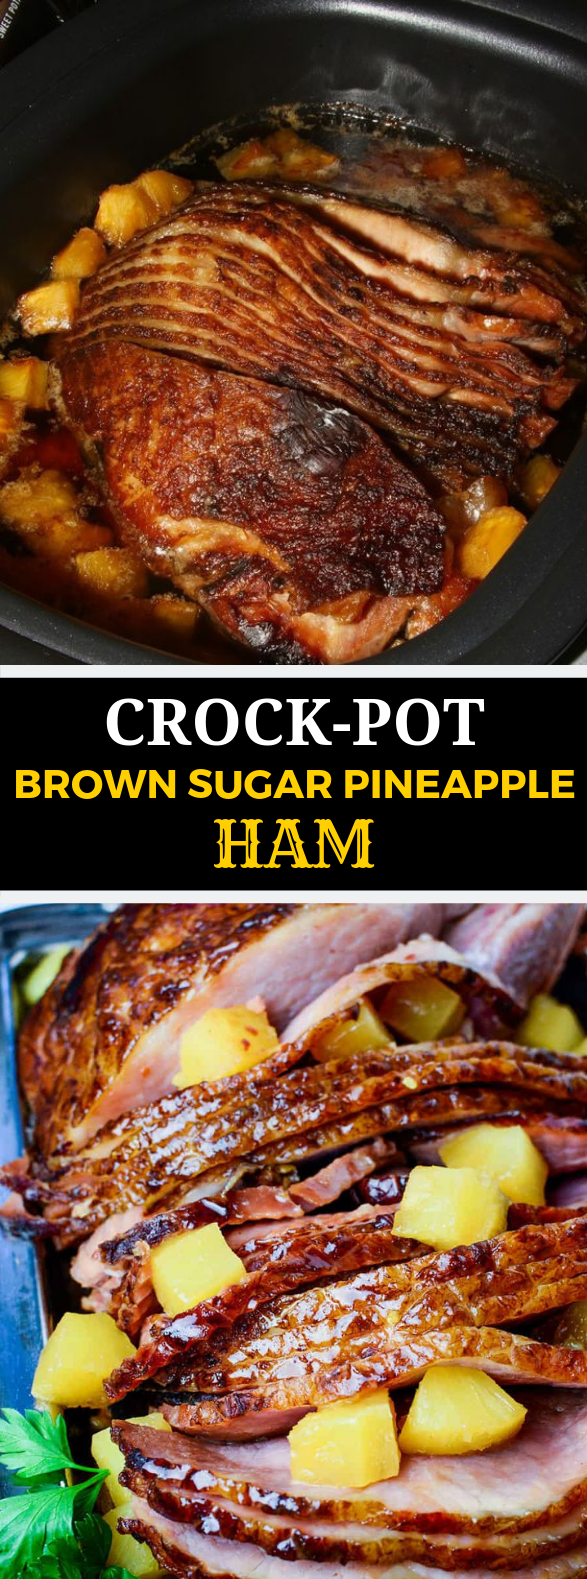 Crock-Pot Brown Sugar Pineapple Ham for the Holidays #Dinner #Bakedham